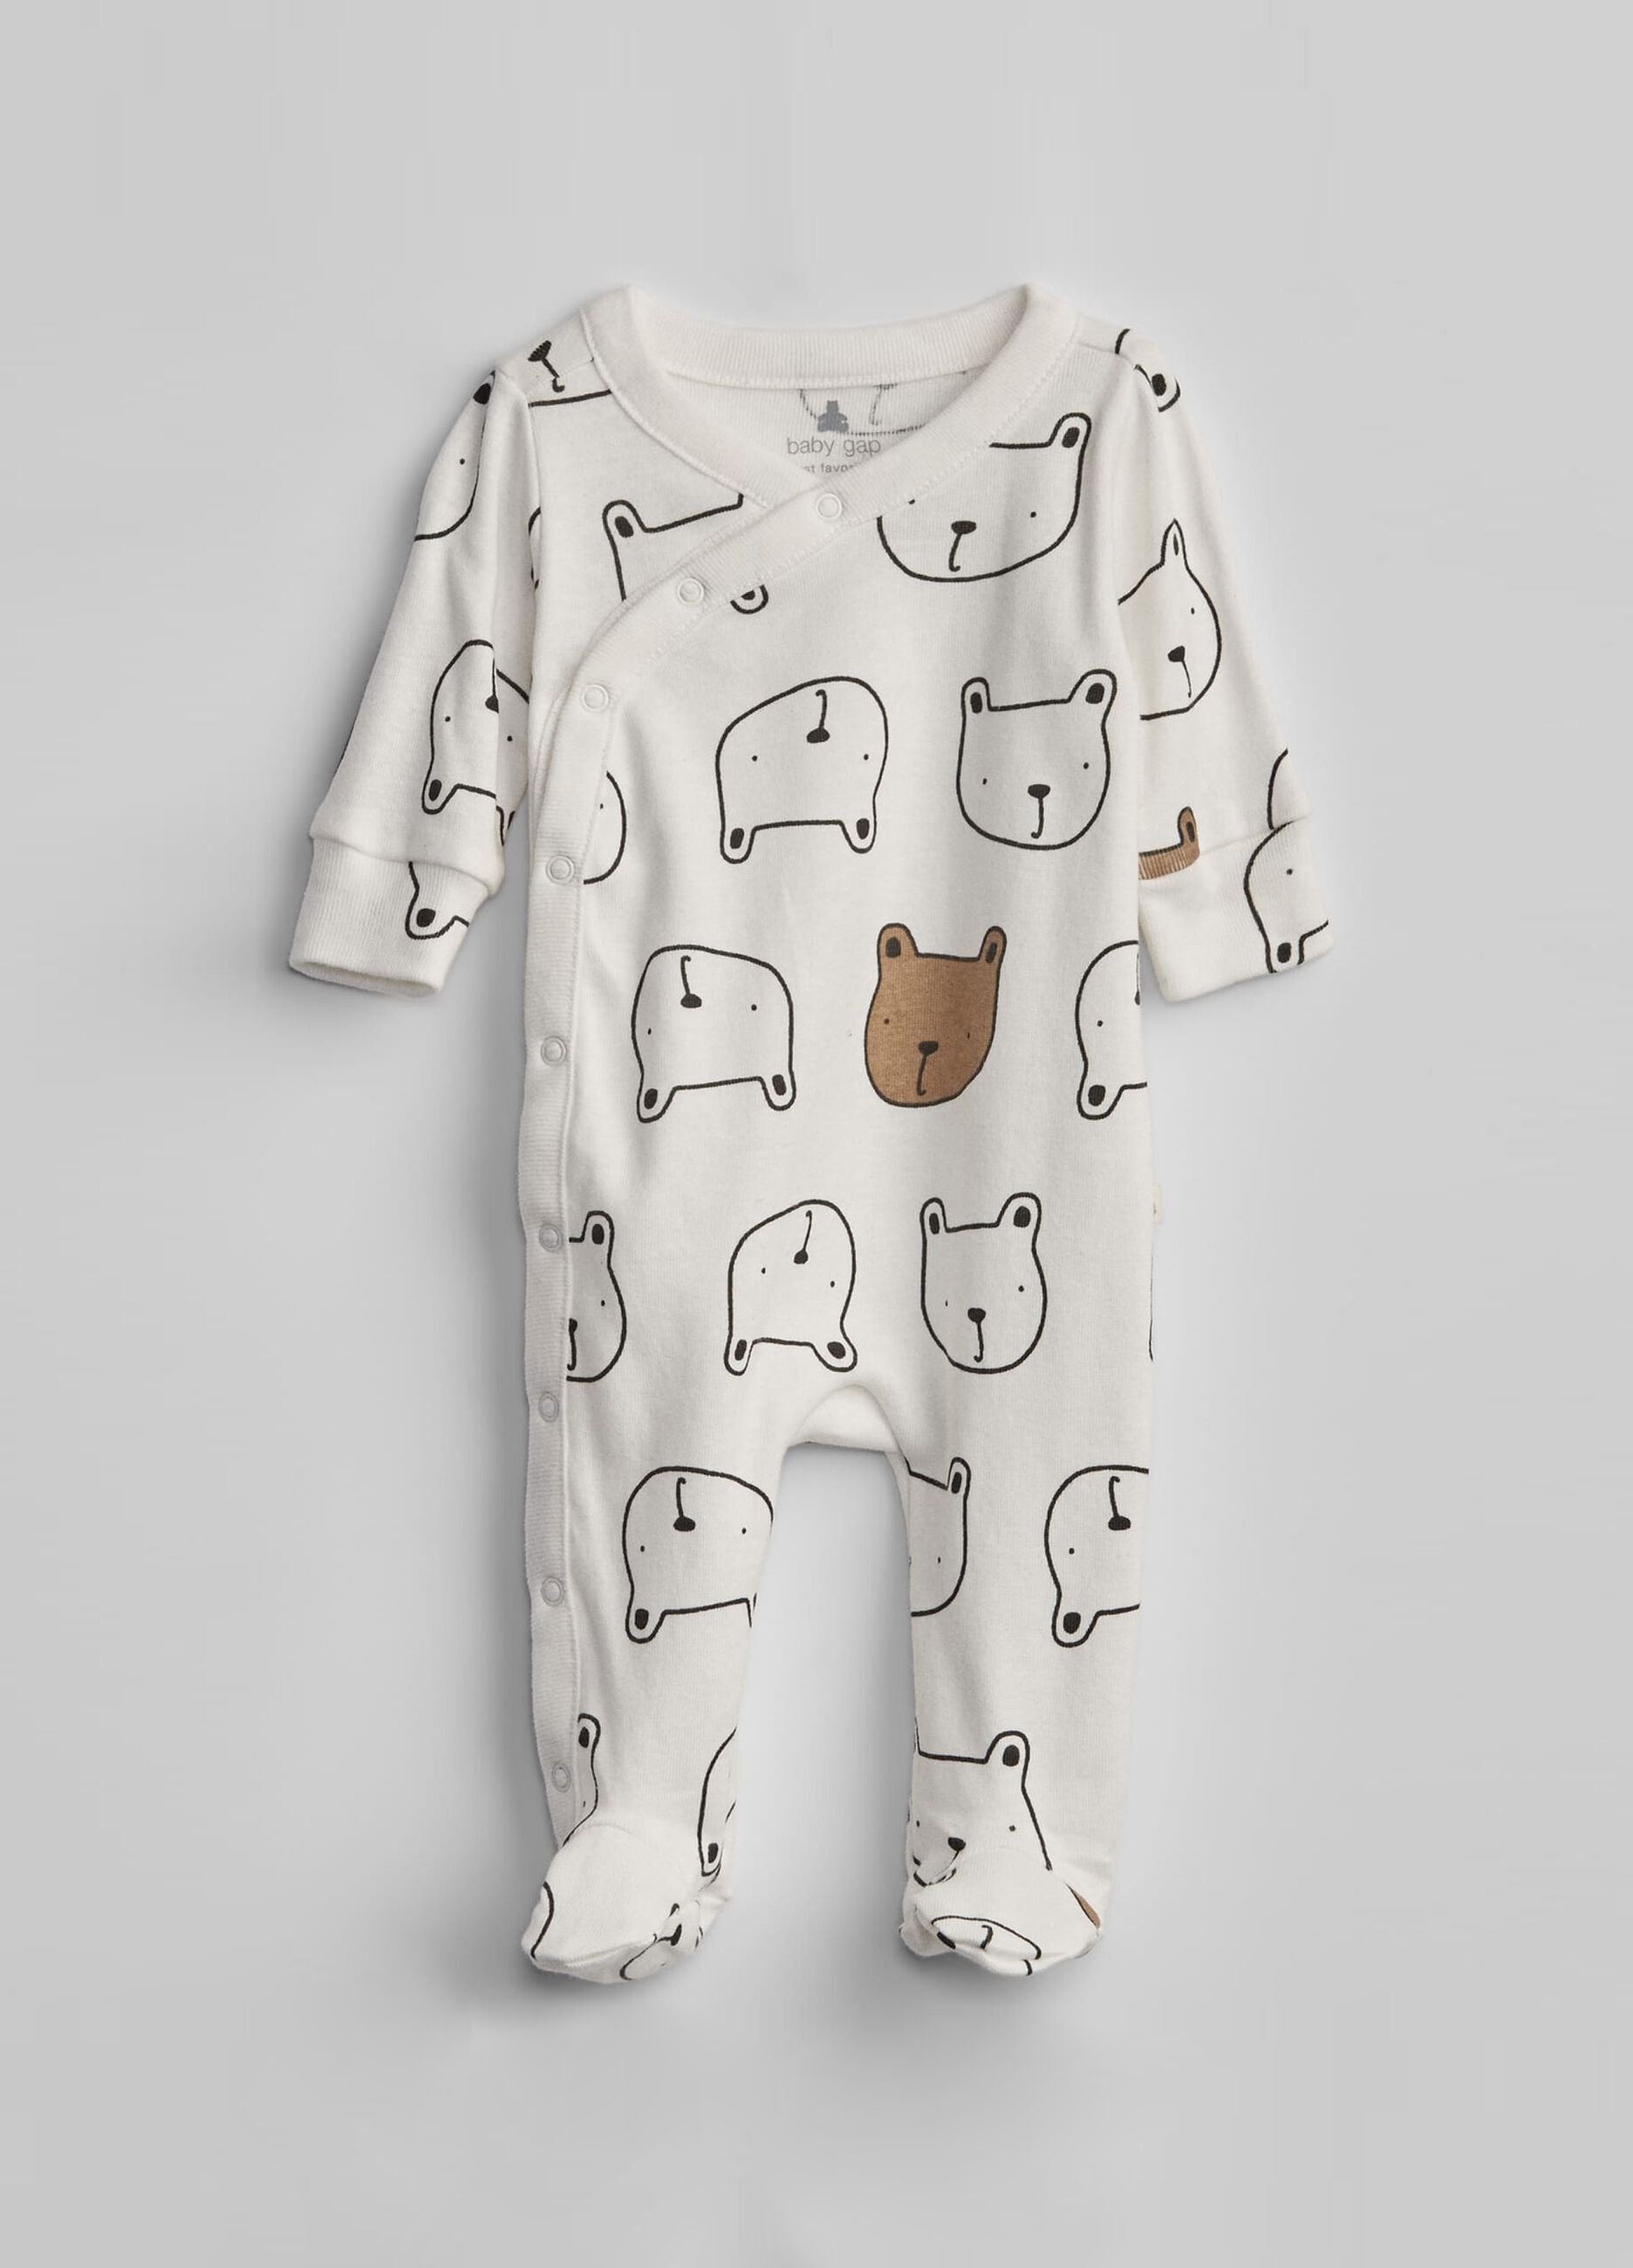 100% cotton onesie with feet and teddy bear print